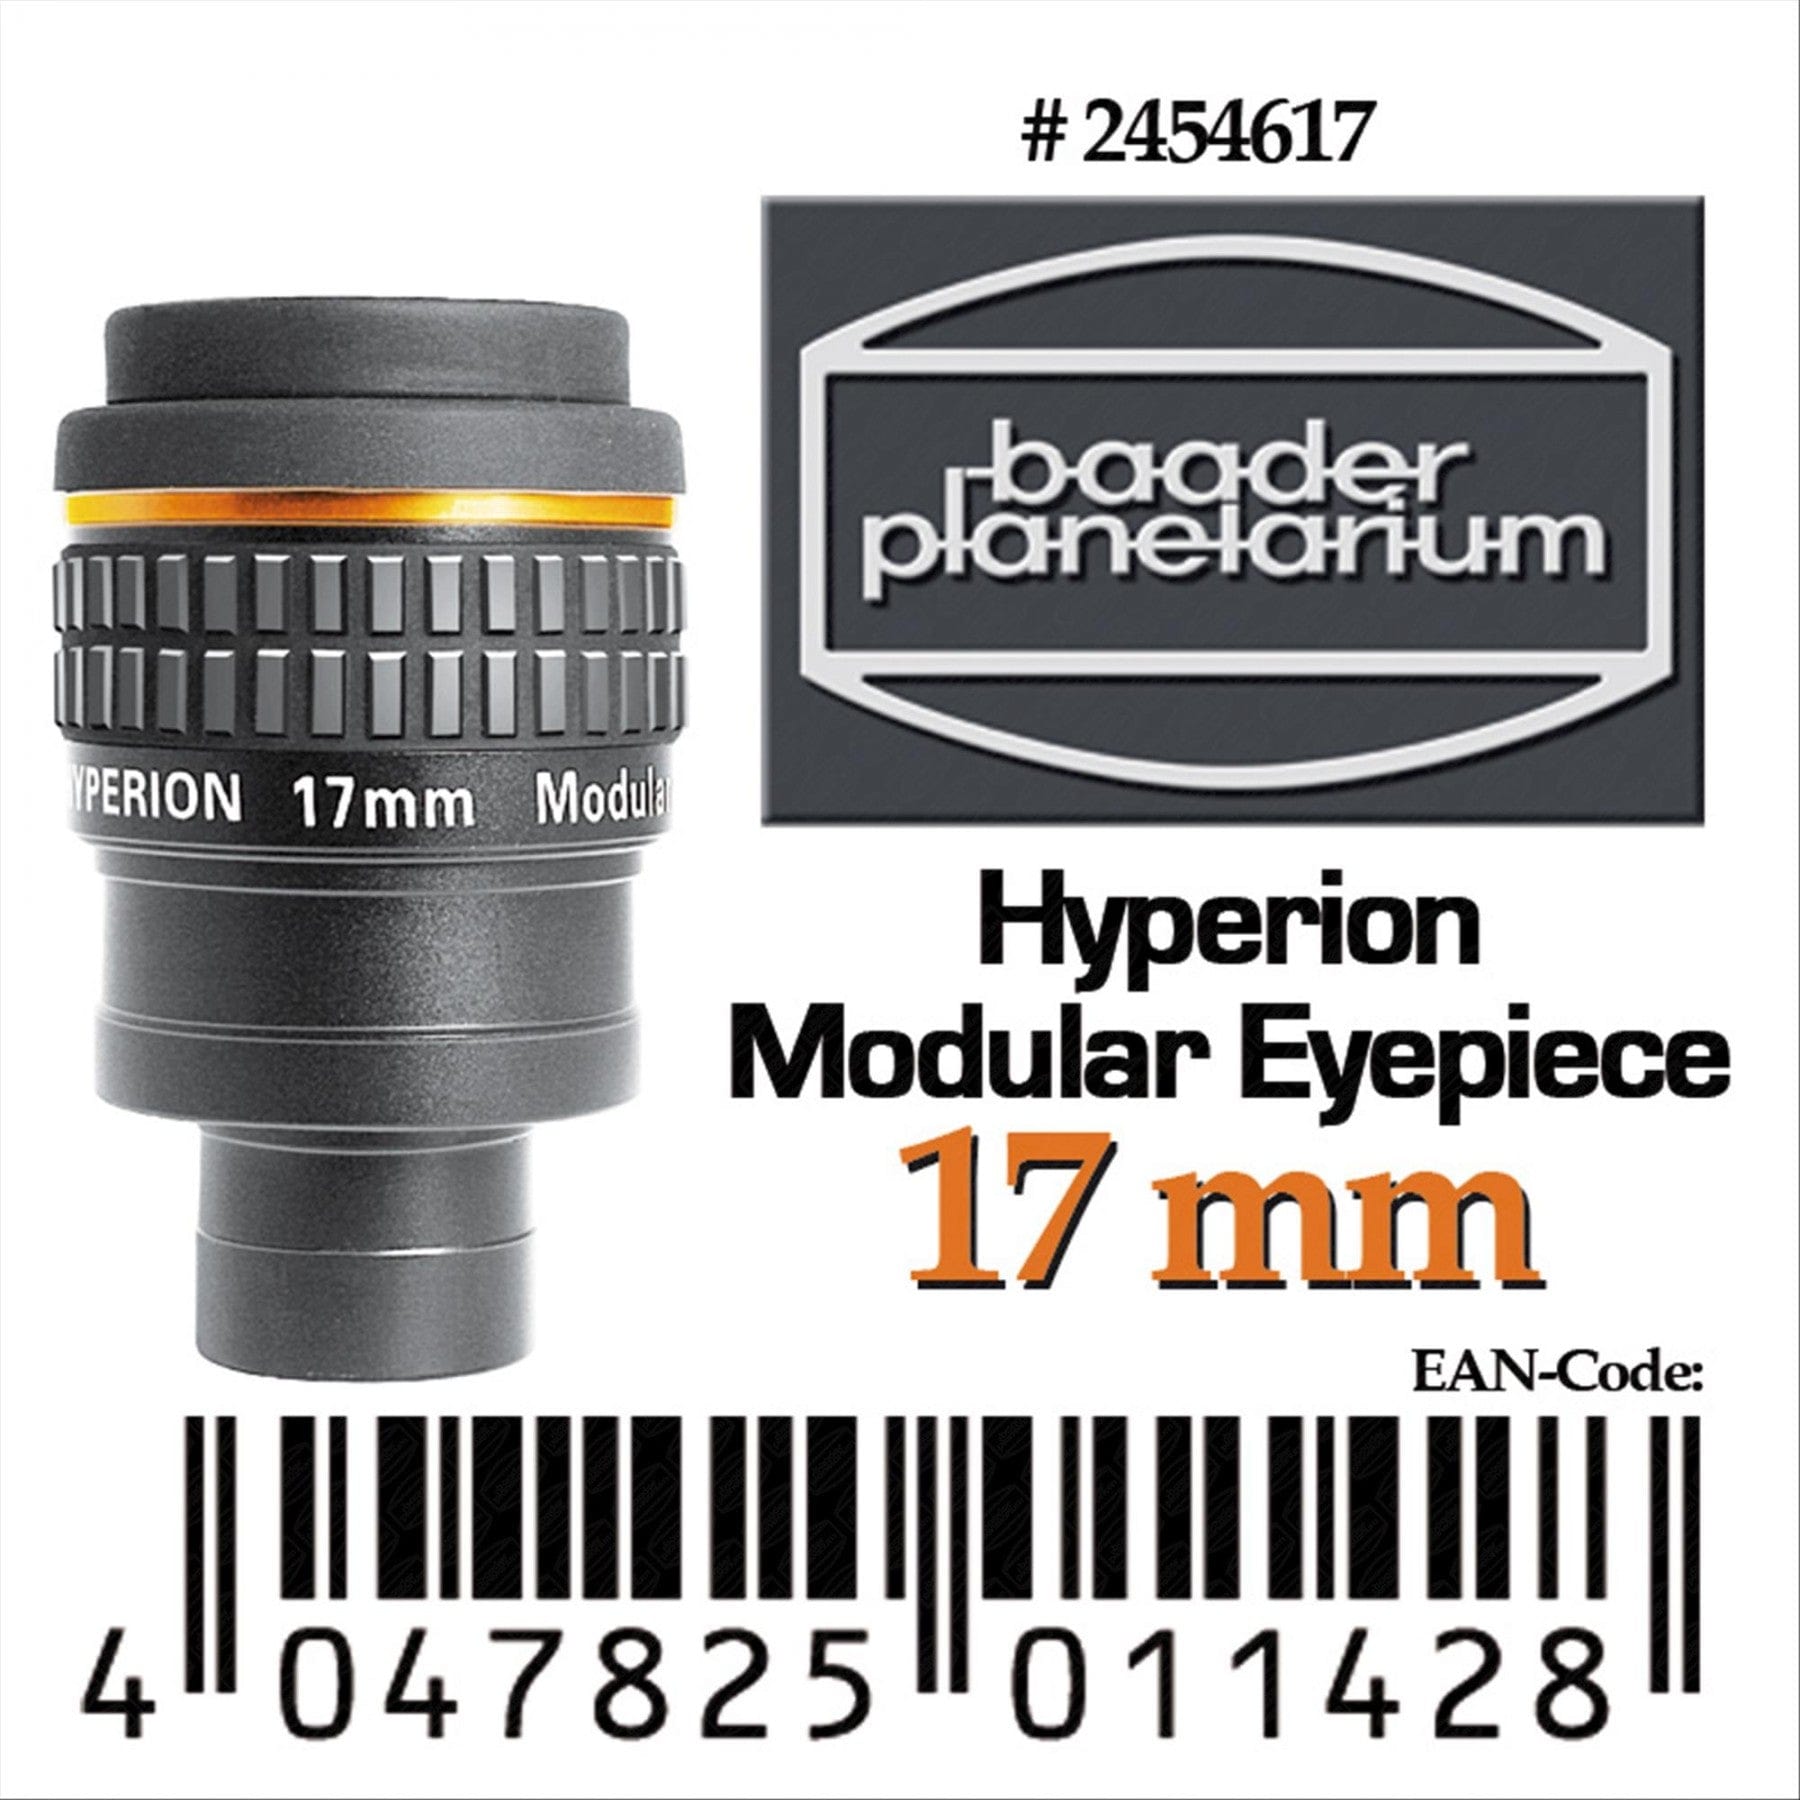 Baader Planetarium Eyepiece Baader Hyperion 17mm 68 Degree Modular Eyepiece - 2454617